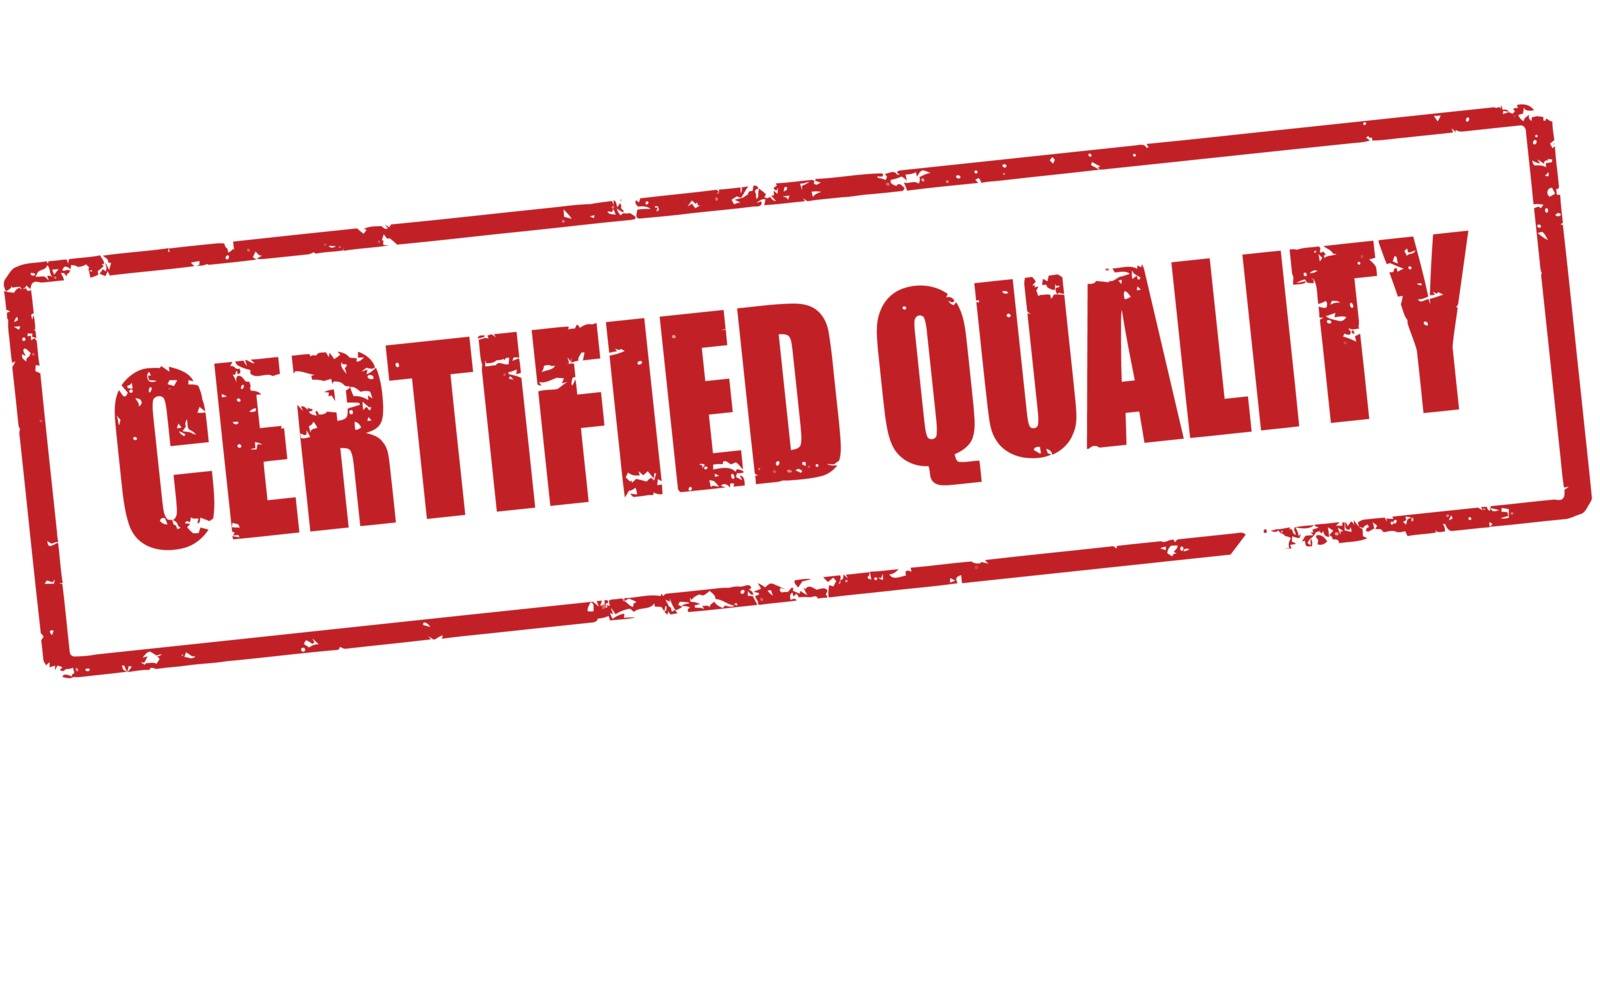 Certified quality by carmenbobo